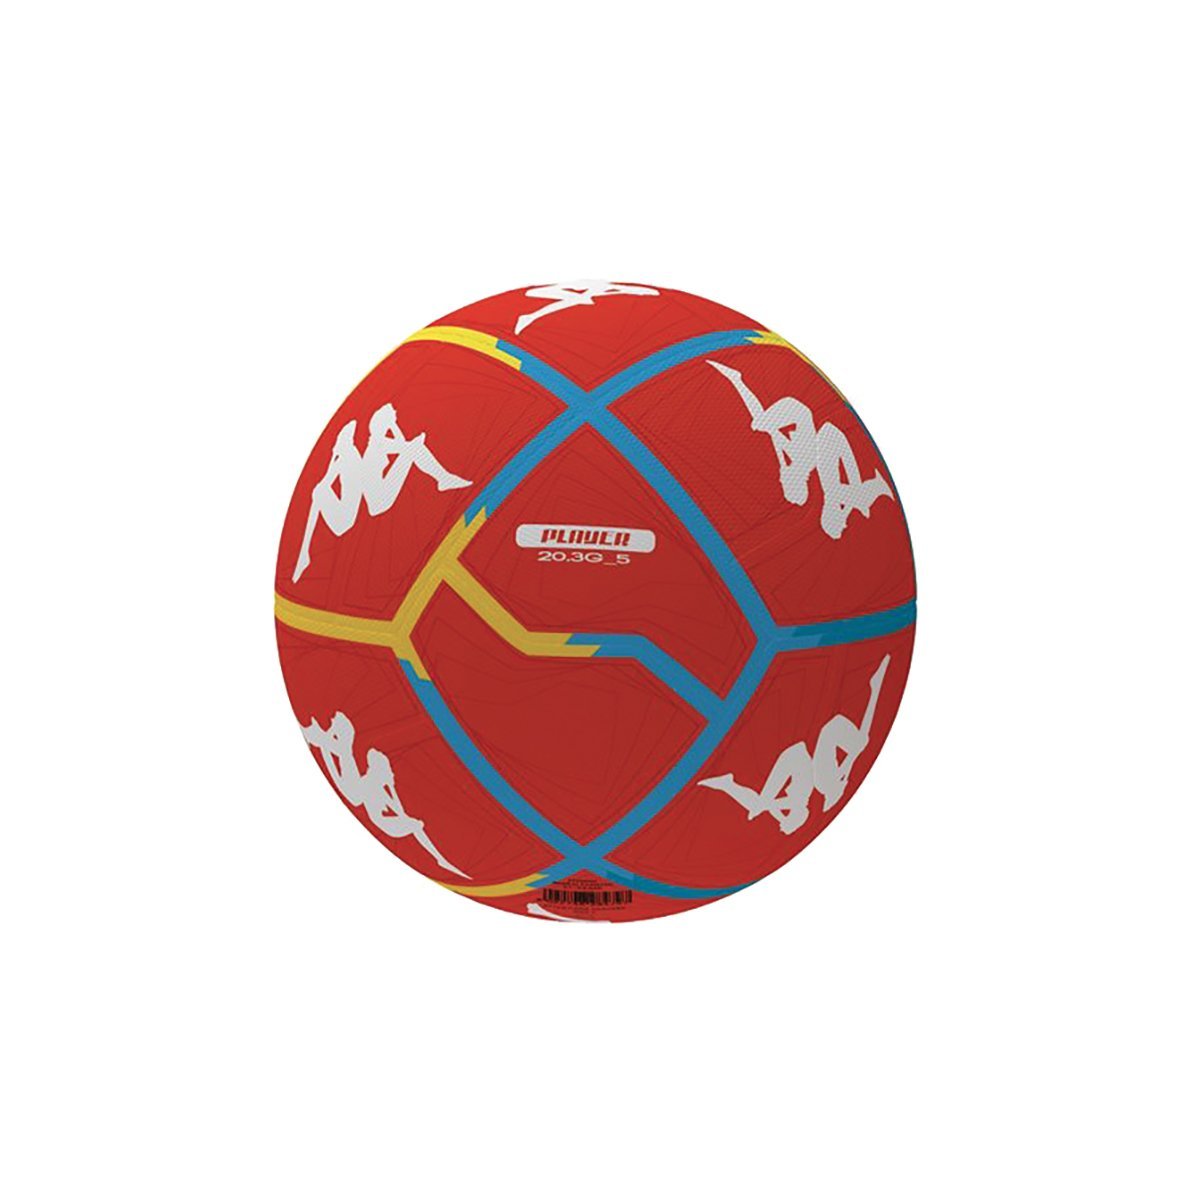 Balón de fútbol unisex 20.3G Naranja - Imagen 1